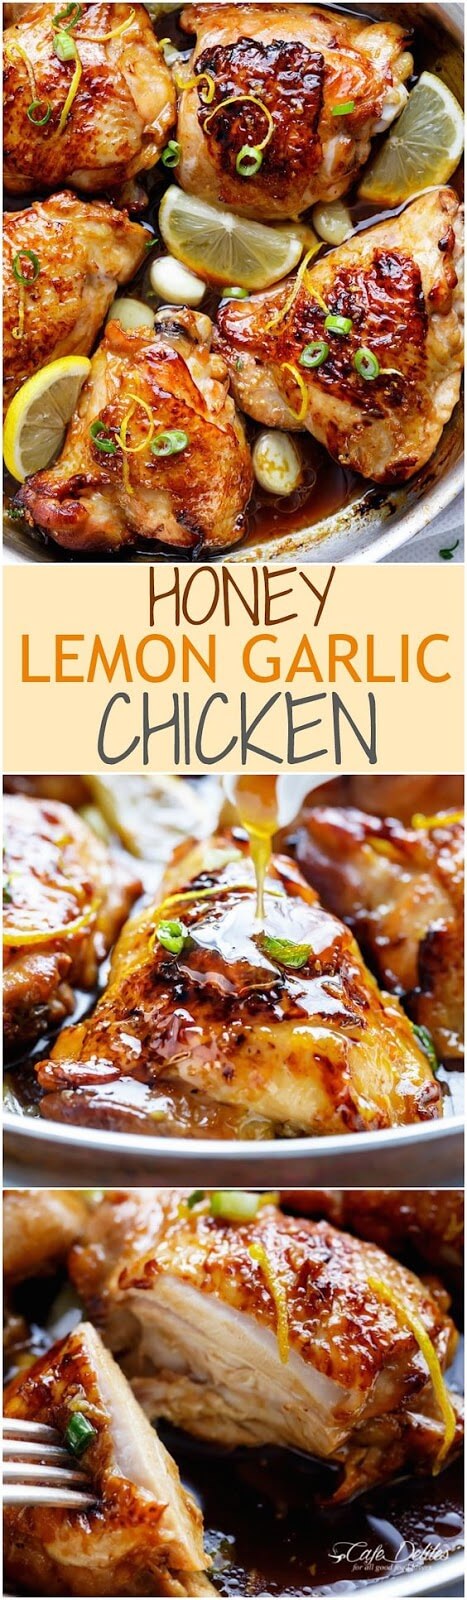 Honey Lemon Garlic Chicken